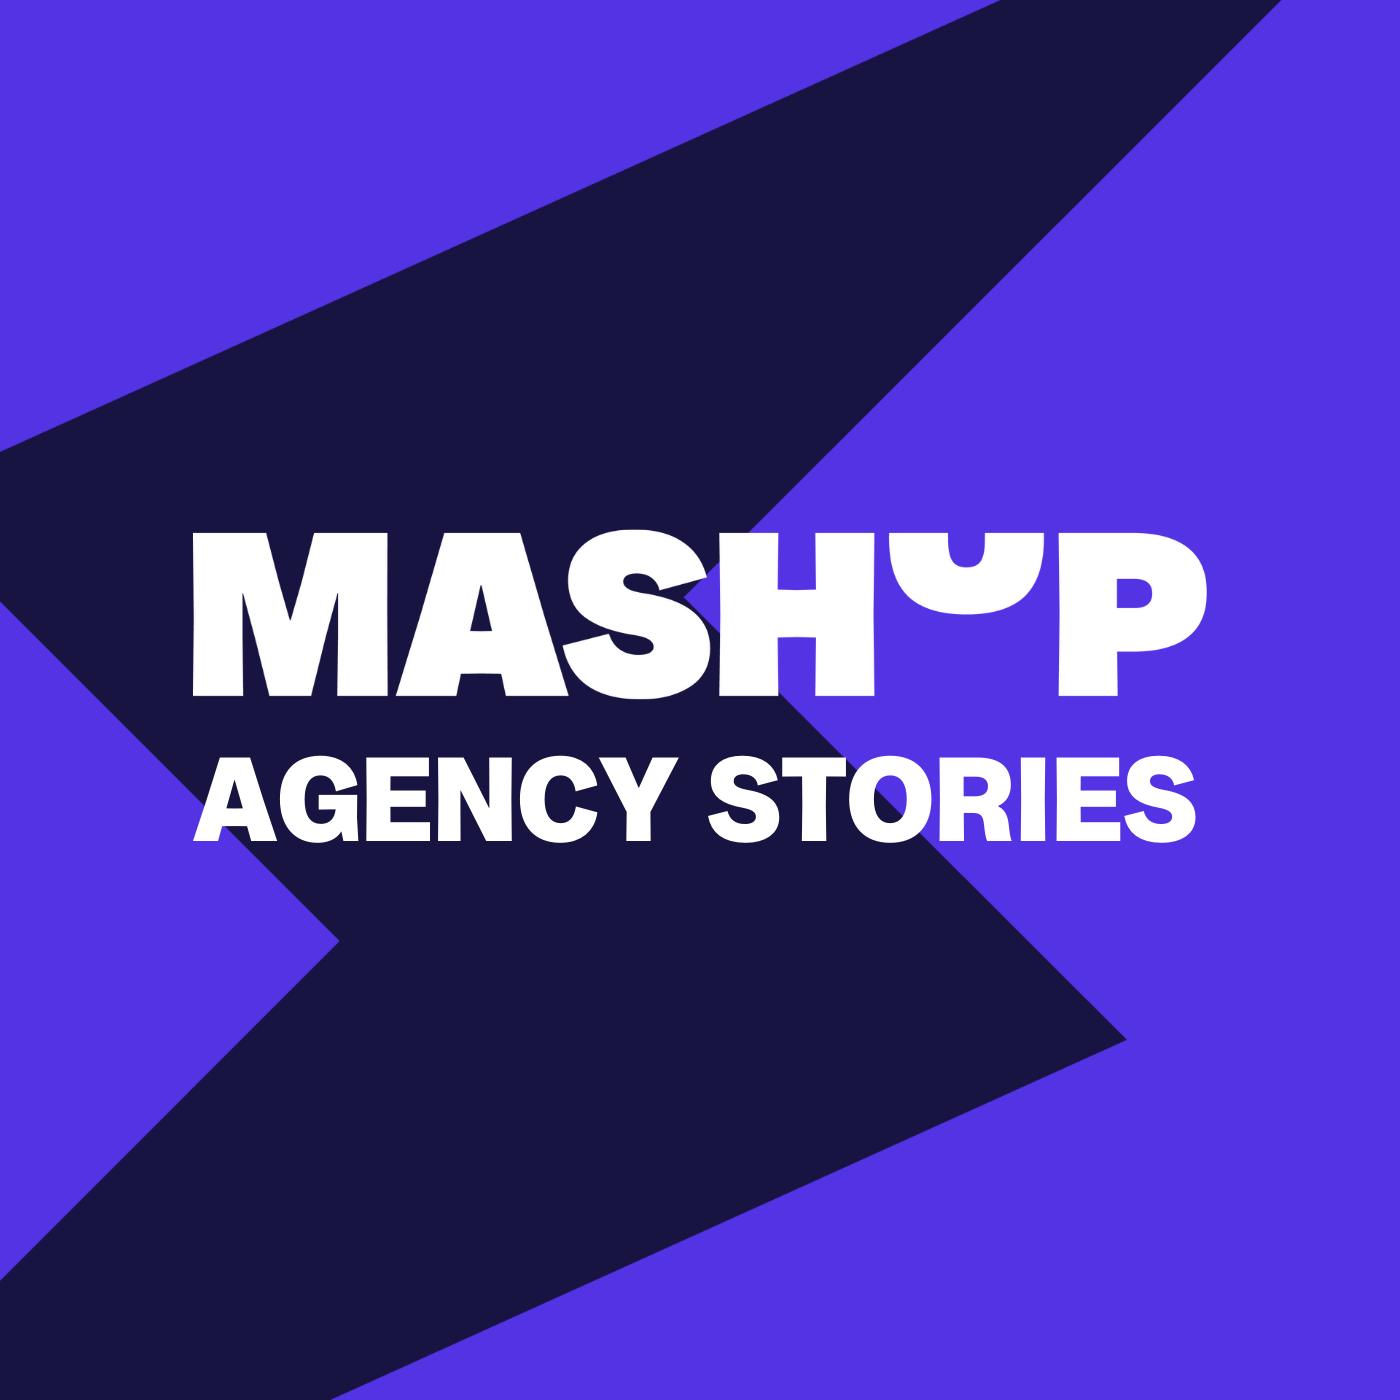 Agency Stories